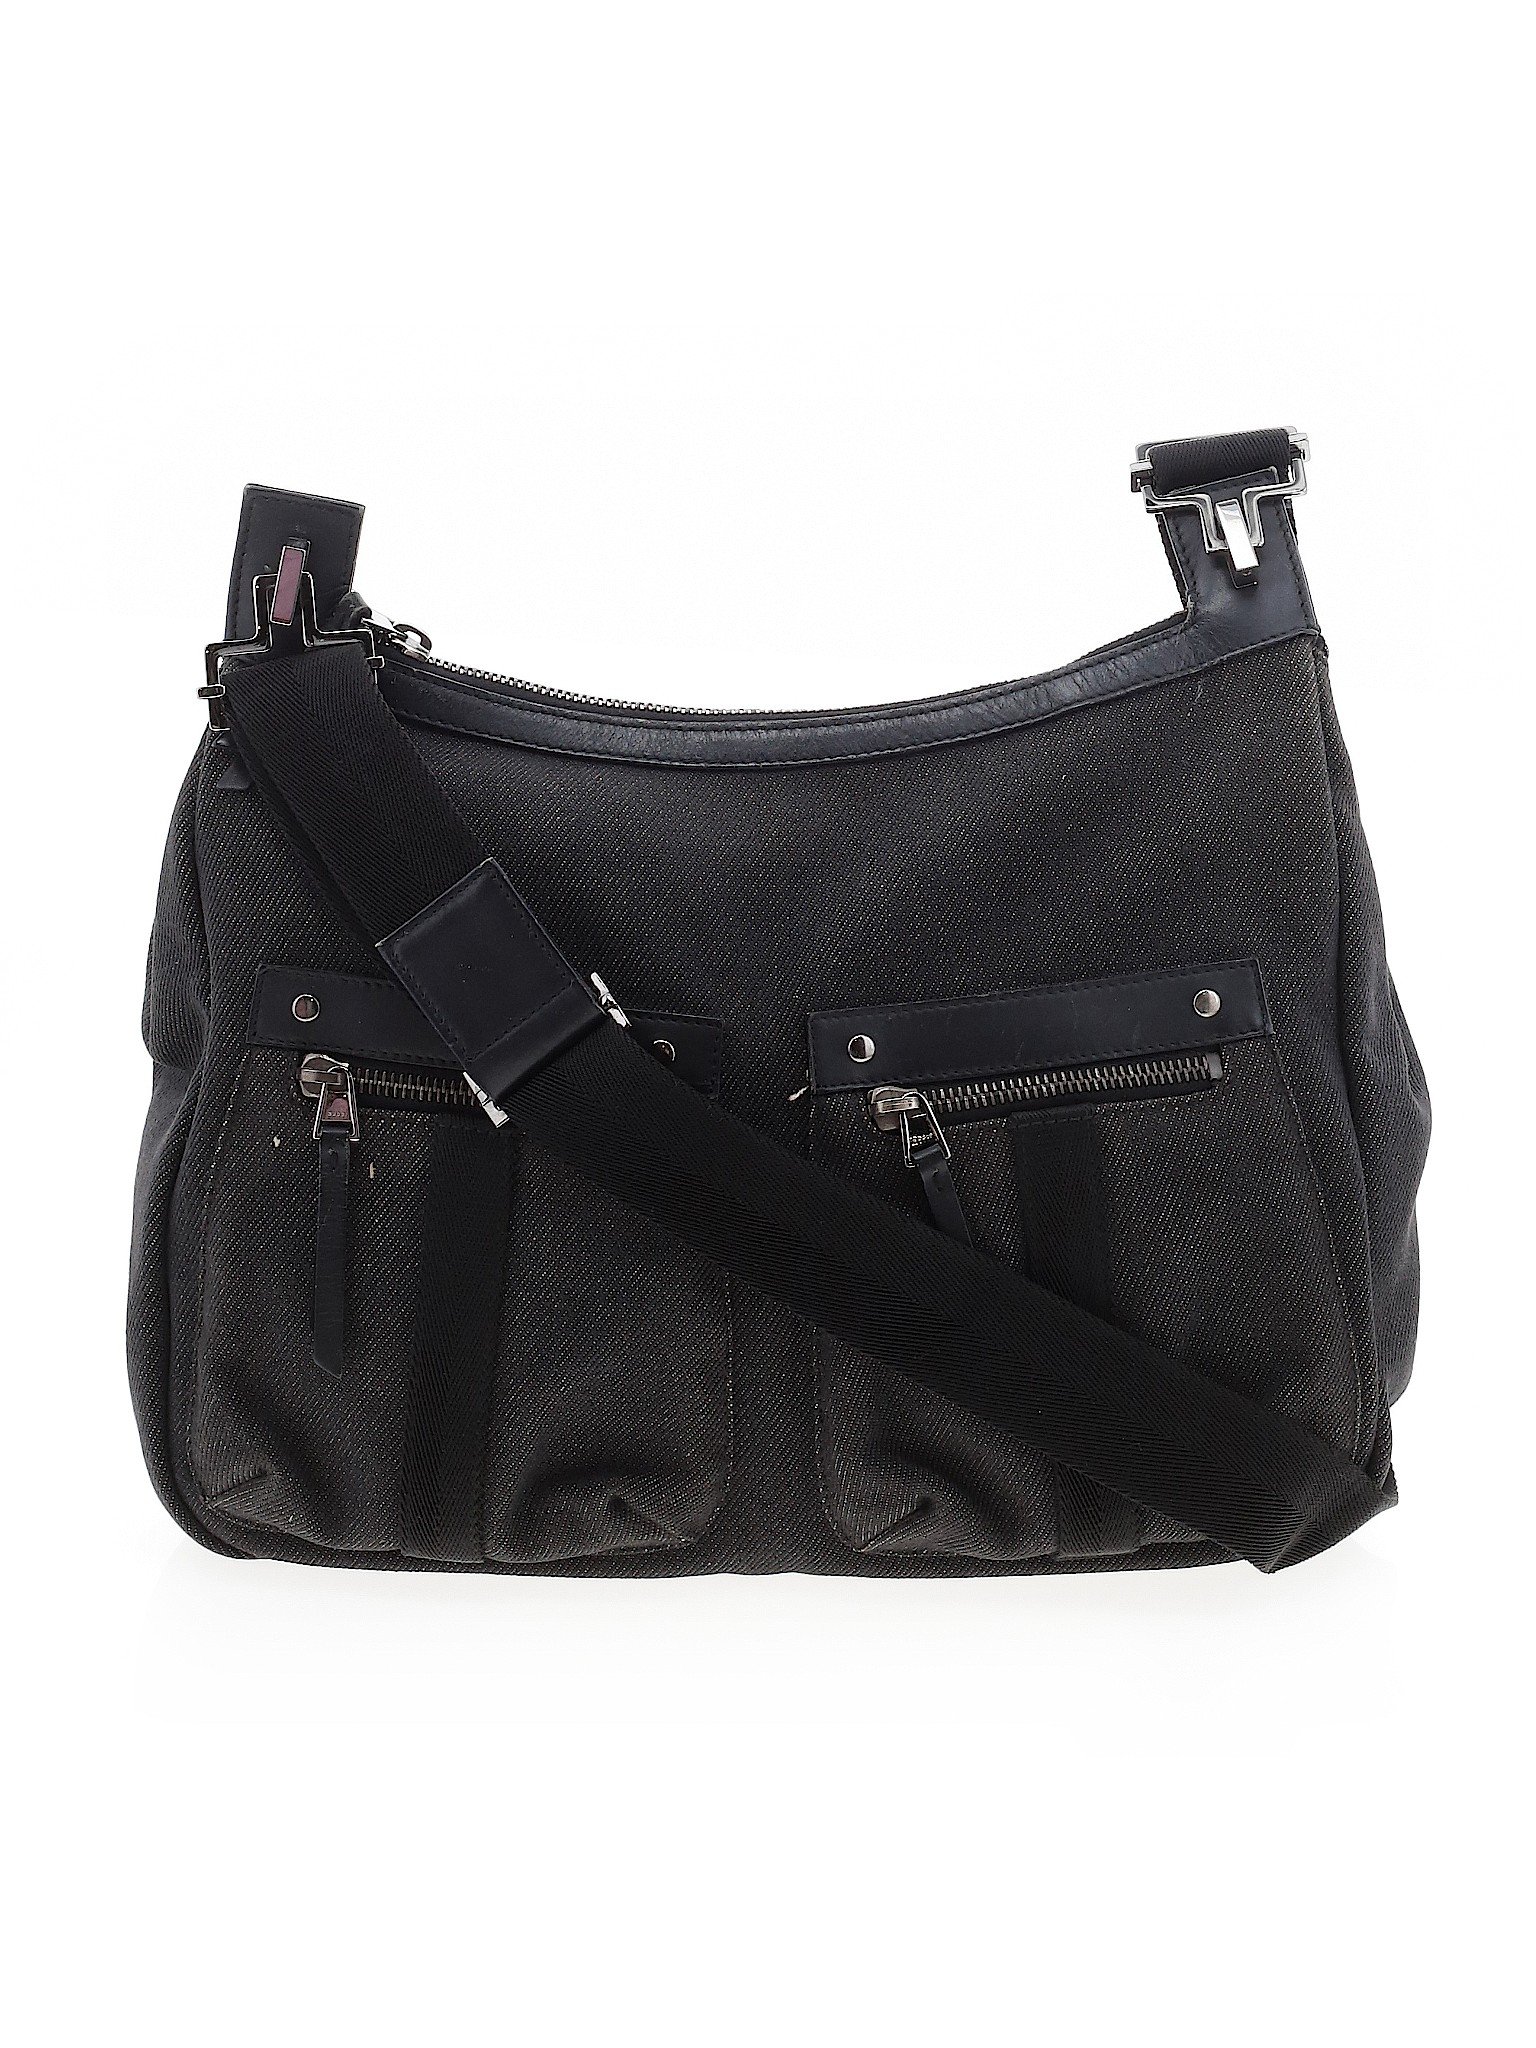 Gucci Women Black Crossbody Bag One Size | eBay